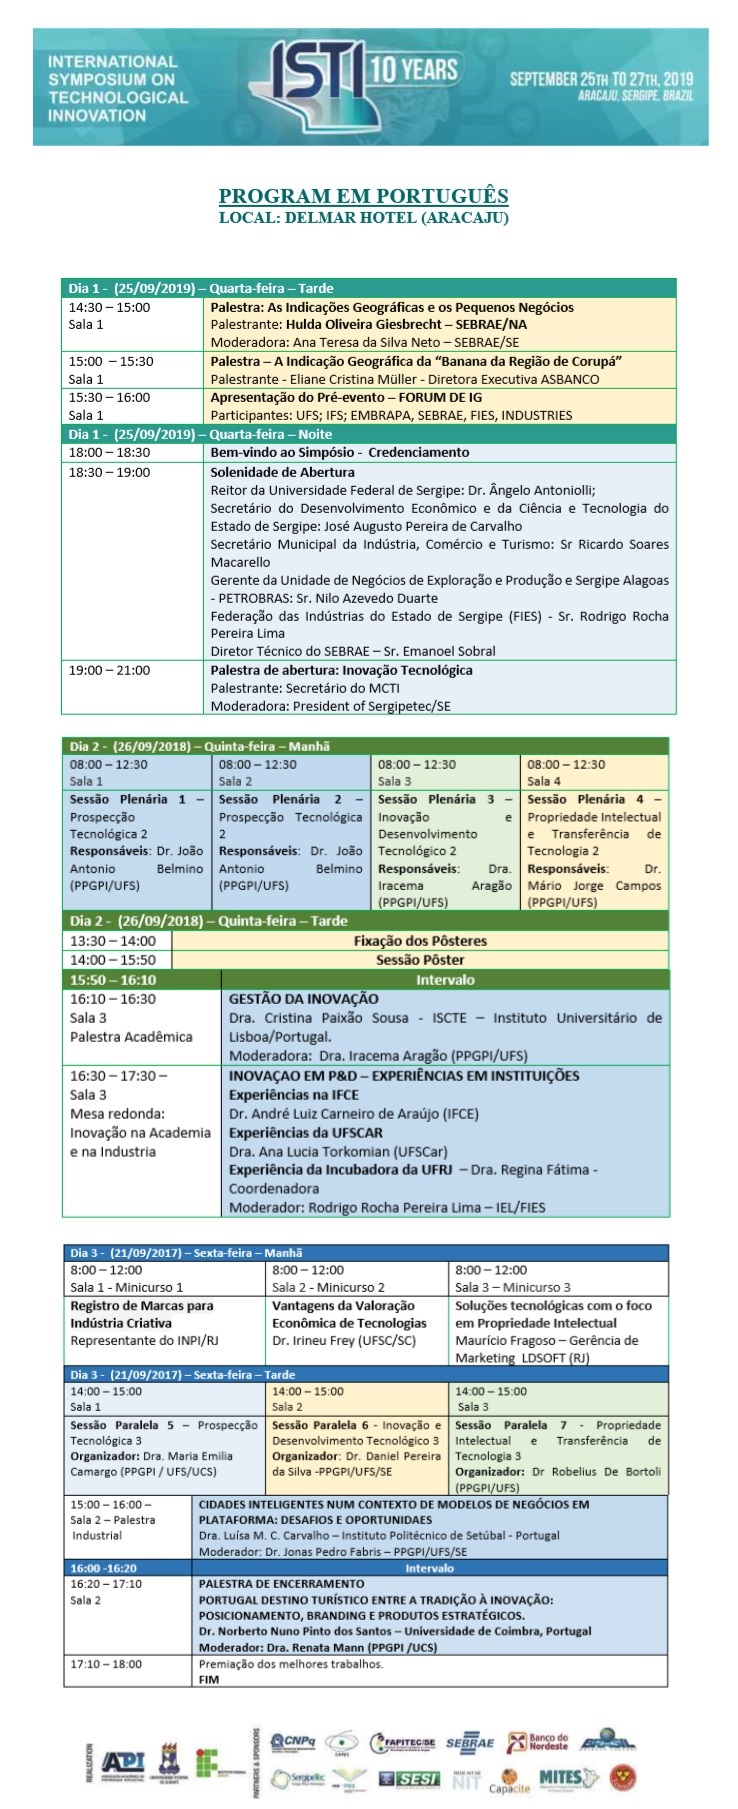 International Symposium on Technological Innovation